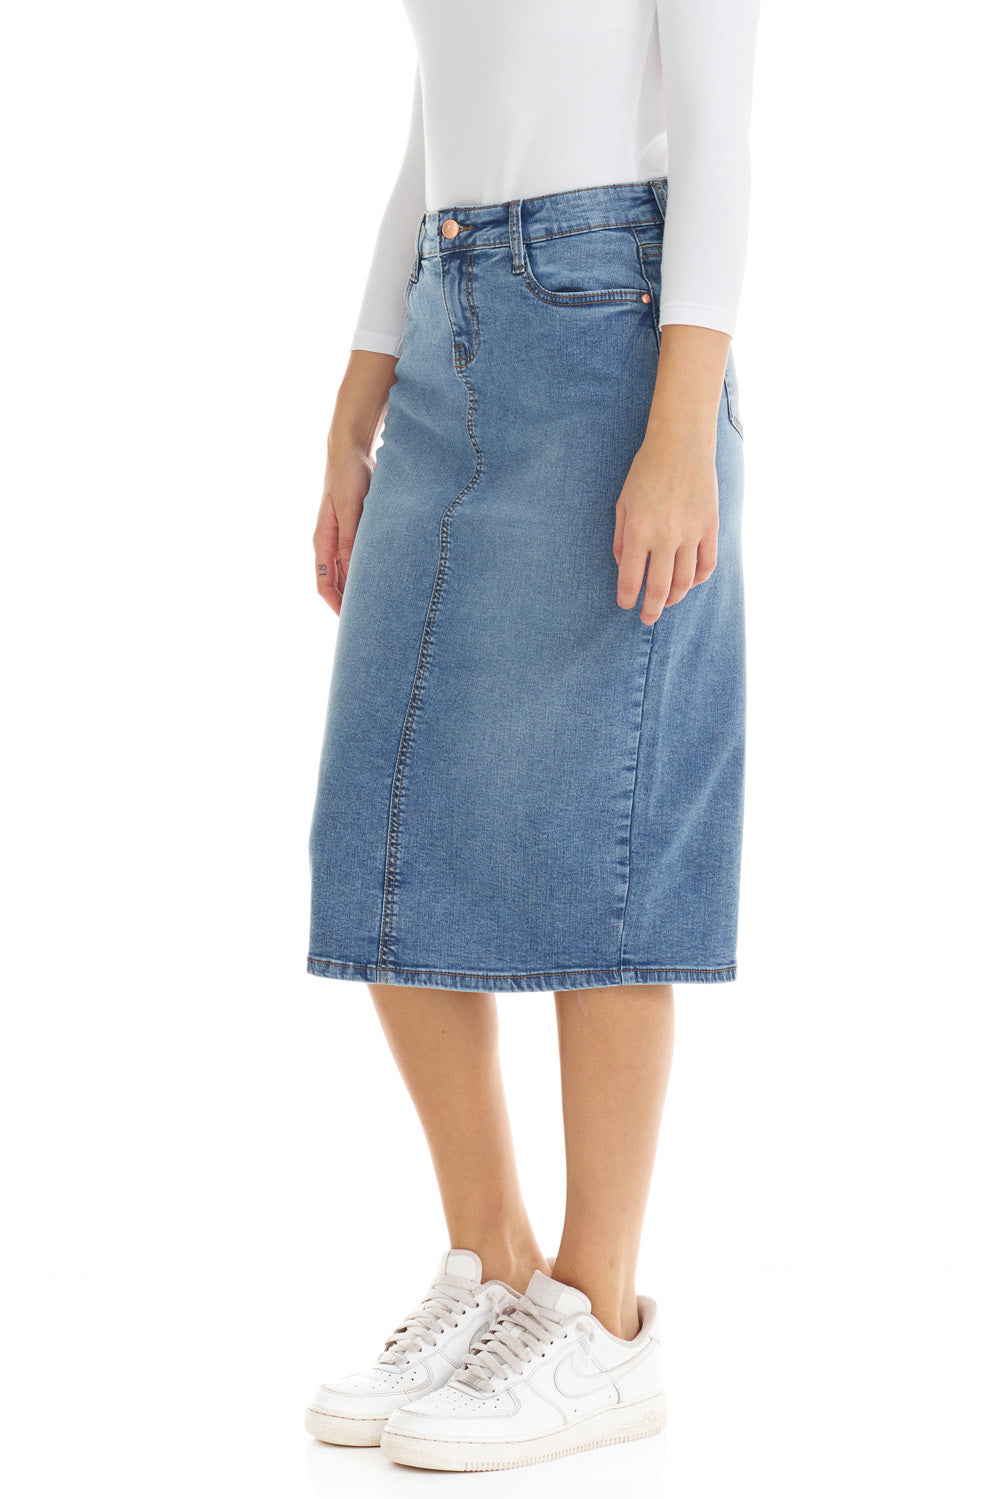 Esteez MILAN Denim Skirt - Midi Below Knee Length Two-Tone Jean Skirt for WOMEN